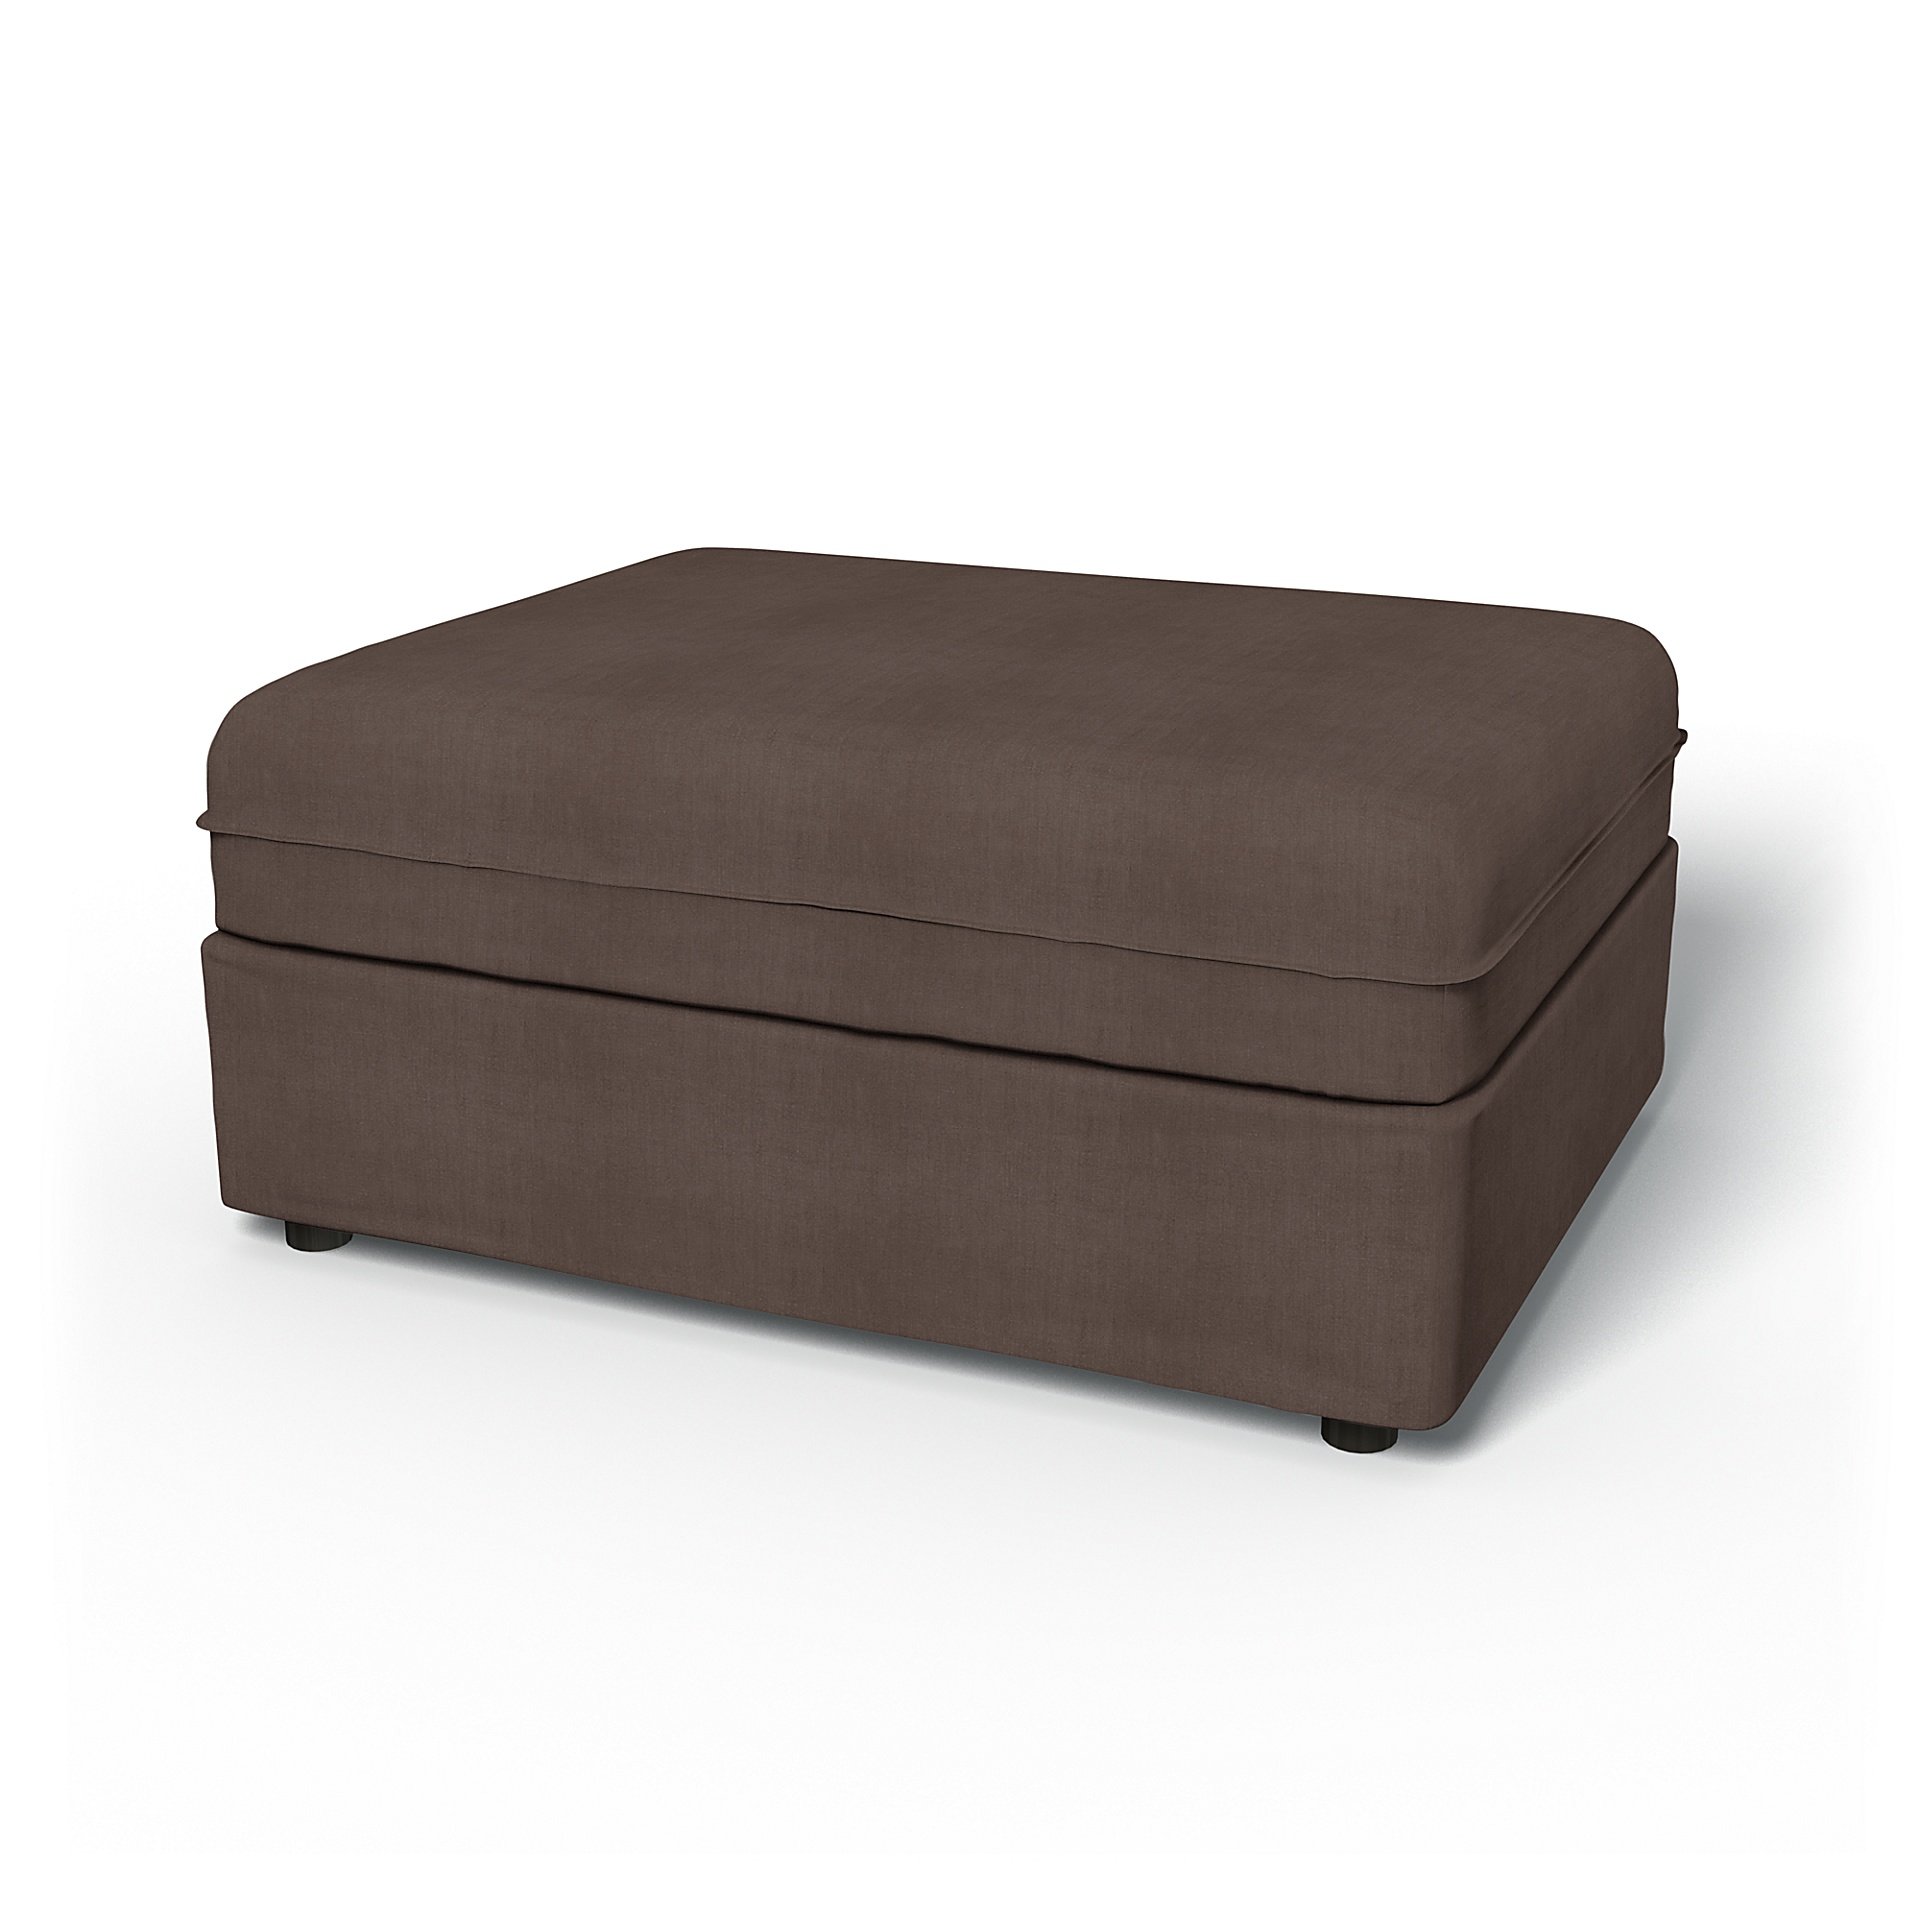 IKEA - Vallentuna Seat Module Cover 100x80cm 39x32in, Cocoa, Linen - Bemz